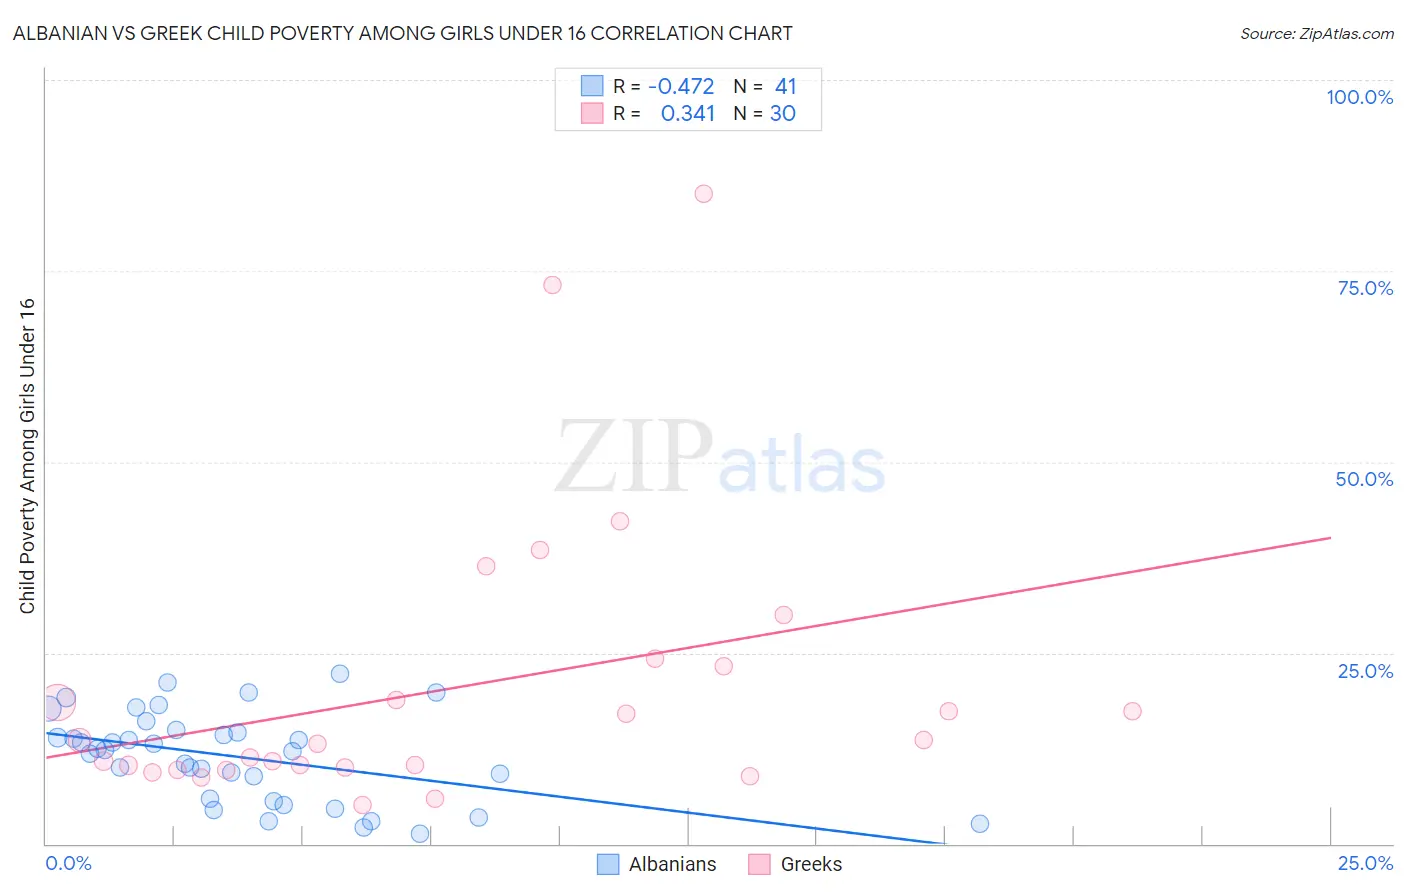 Albanian vs Greek Child Poverty Among Girls Under 16